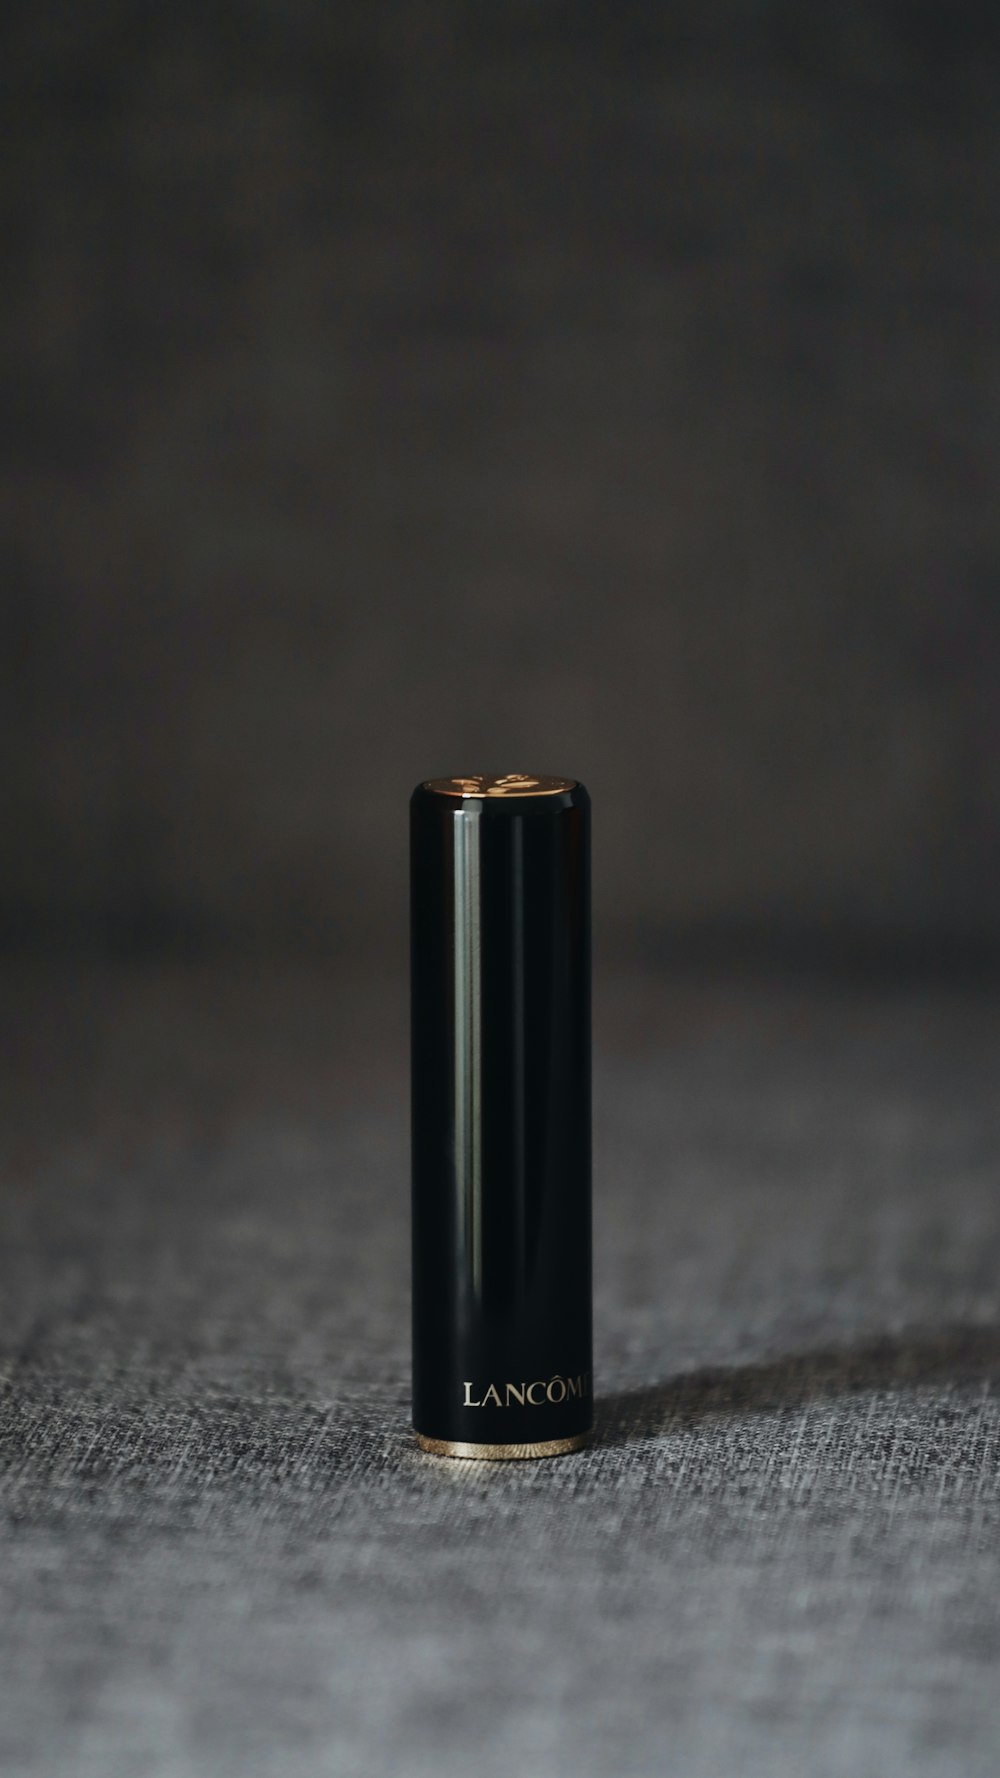 Lancome lipstick bottle